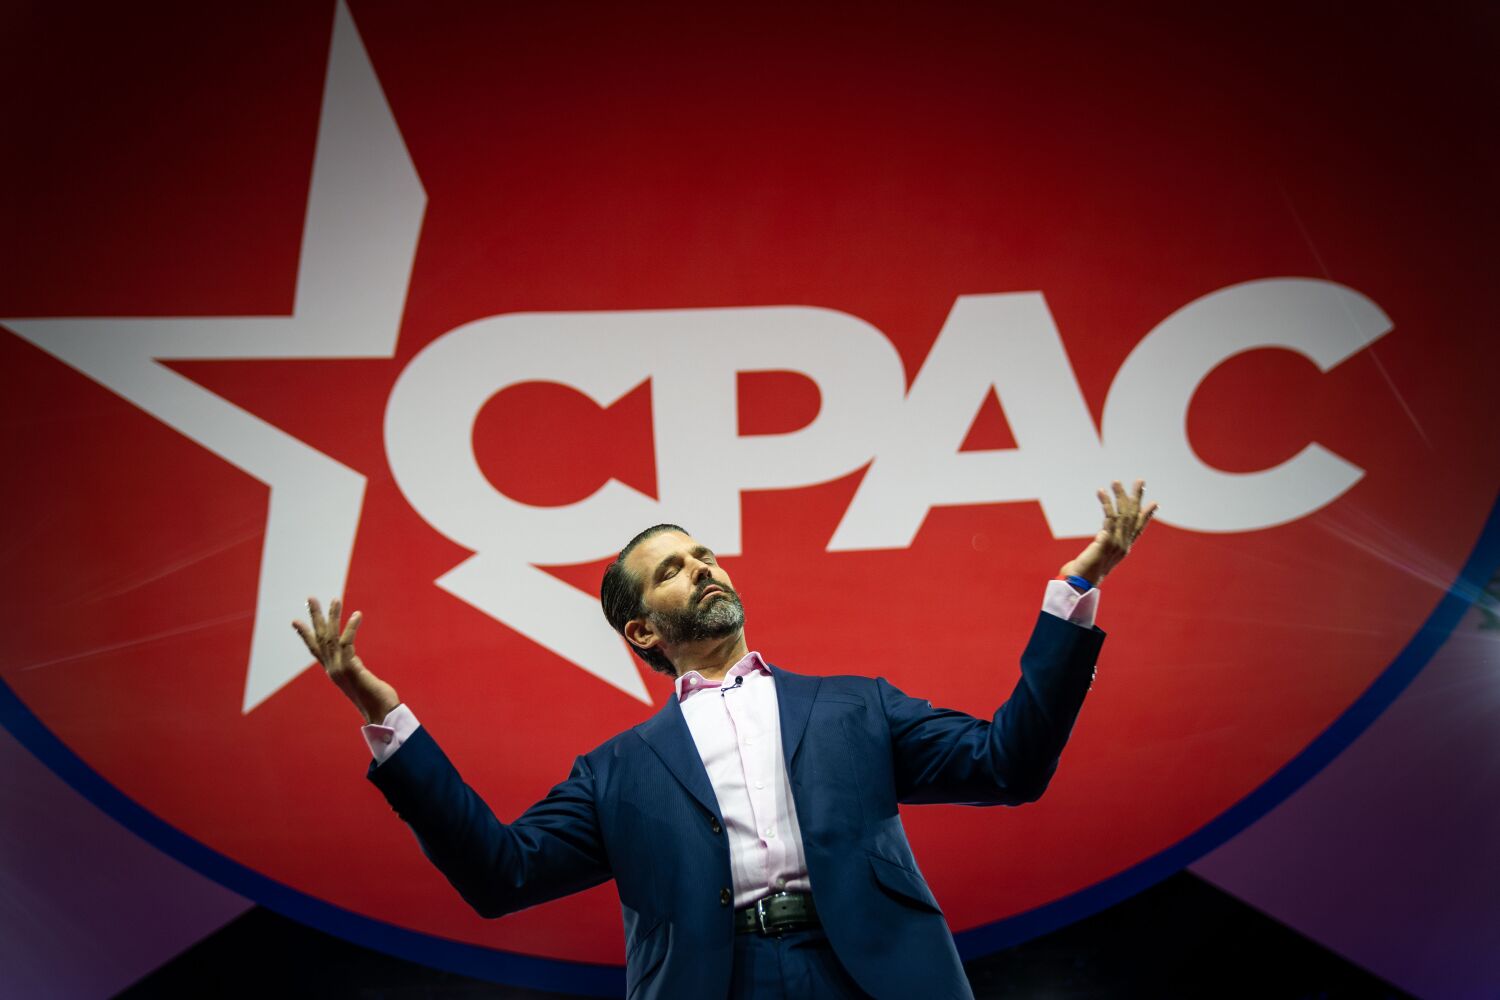 At CPAC, no guarantees of Republican unity